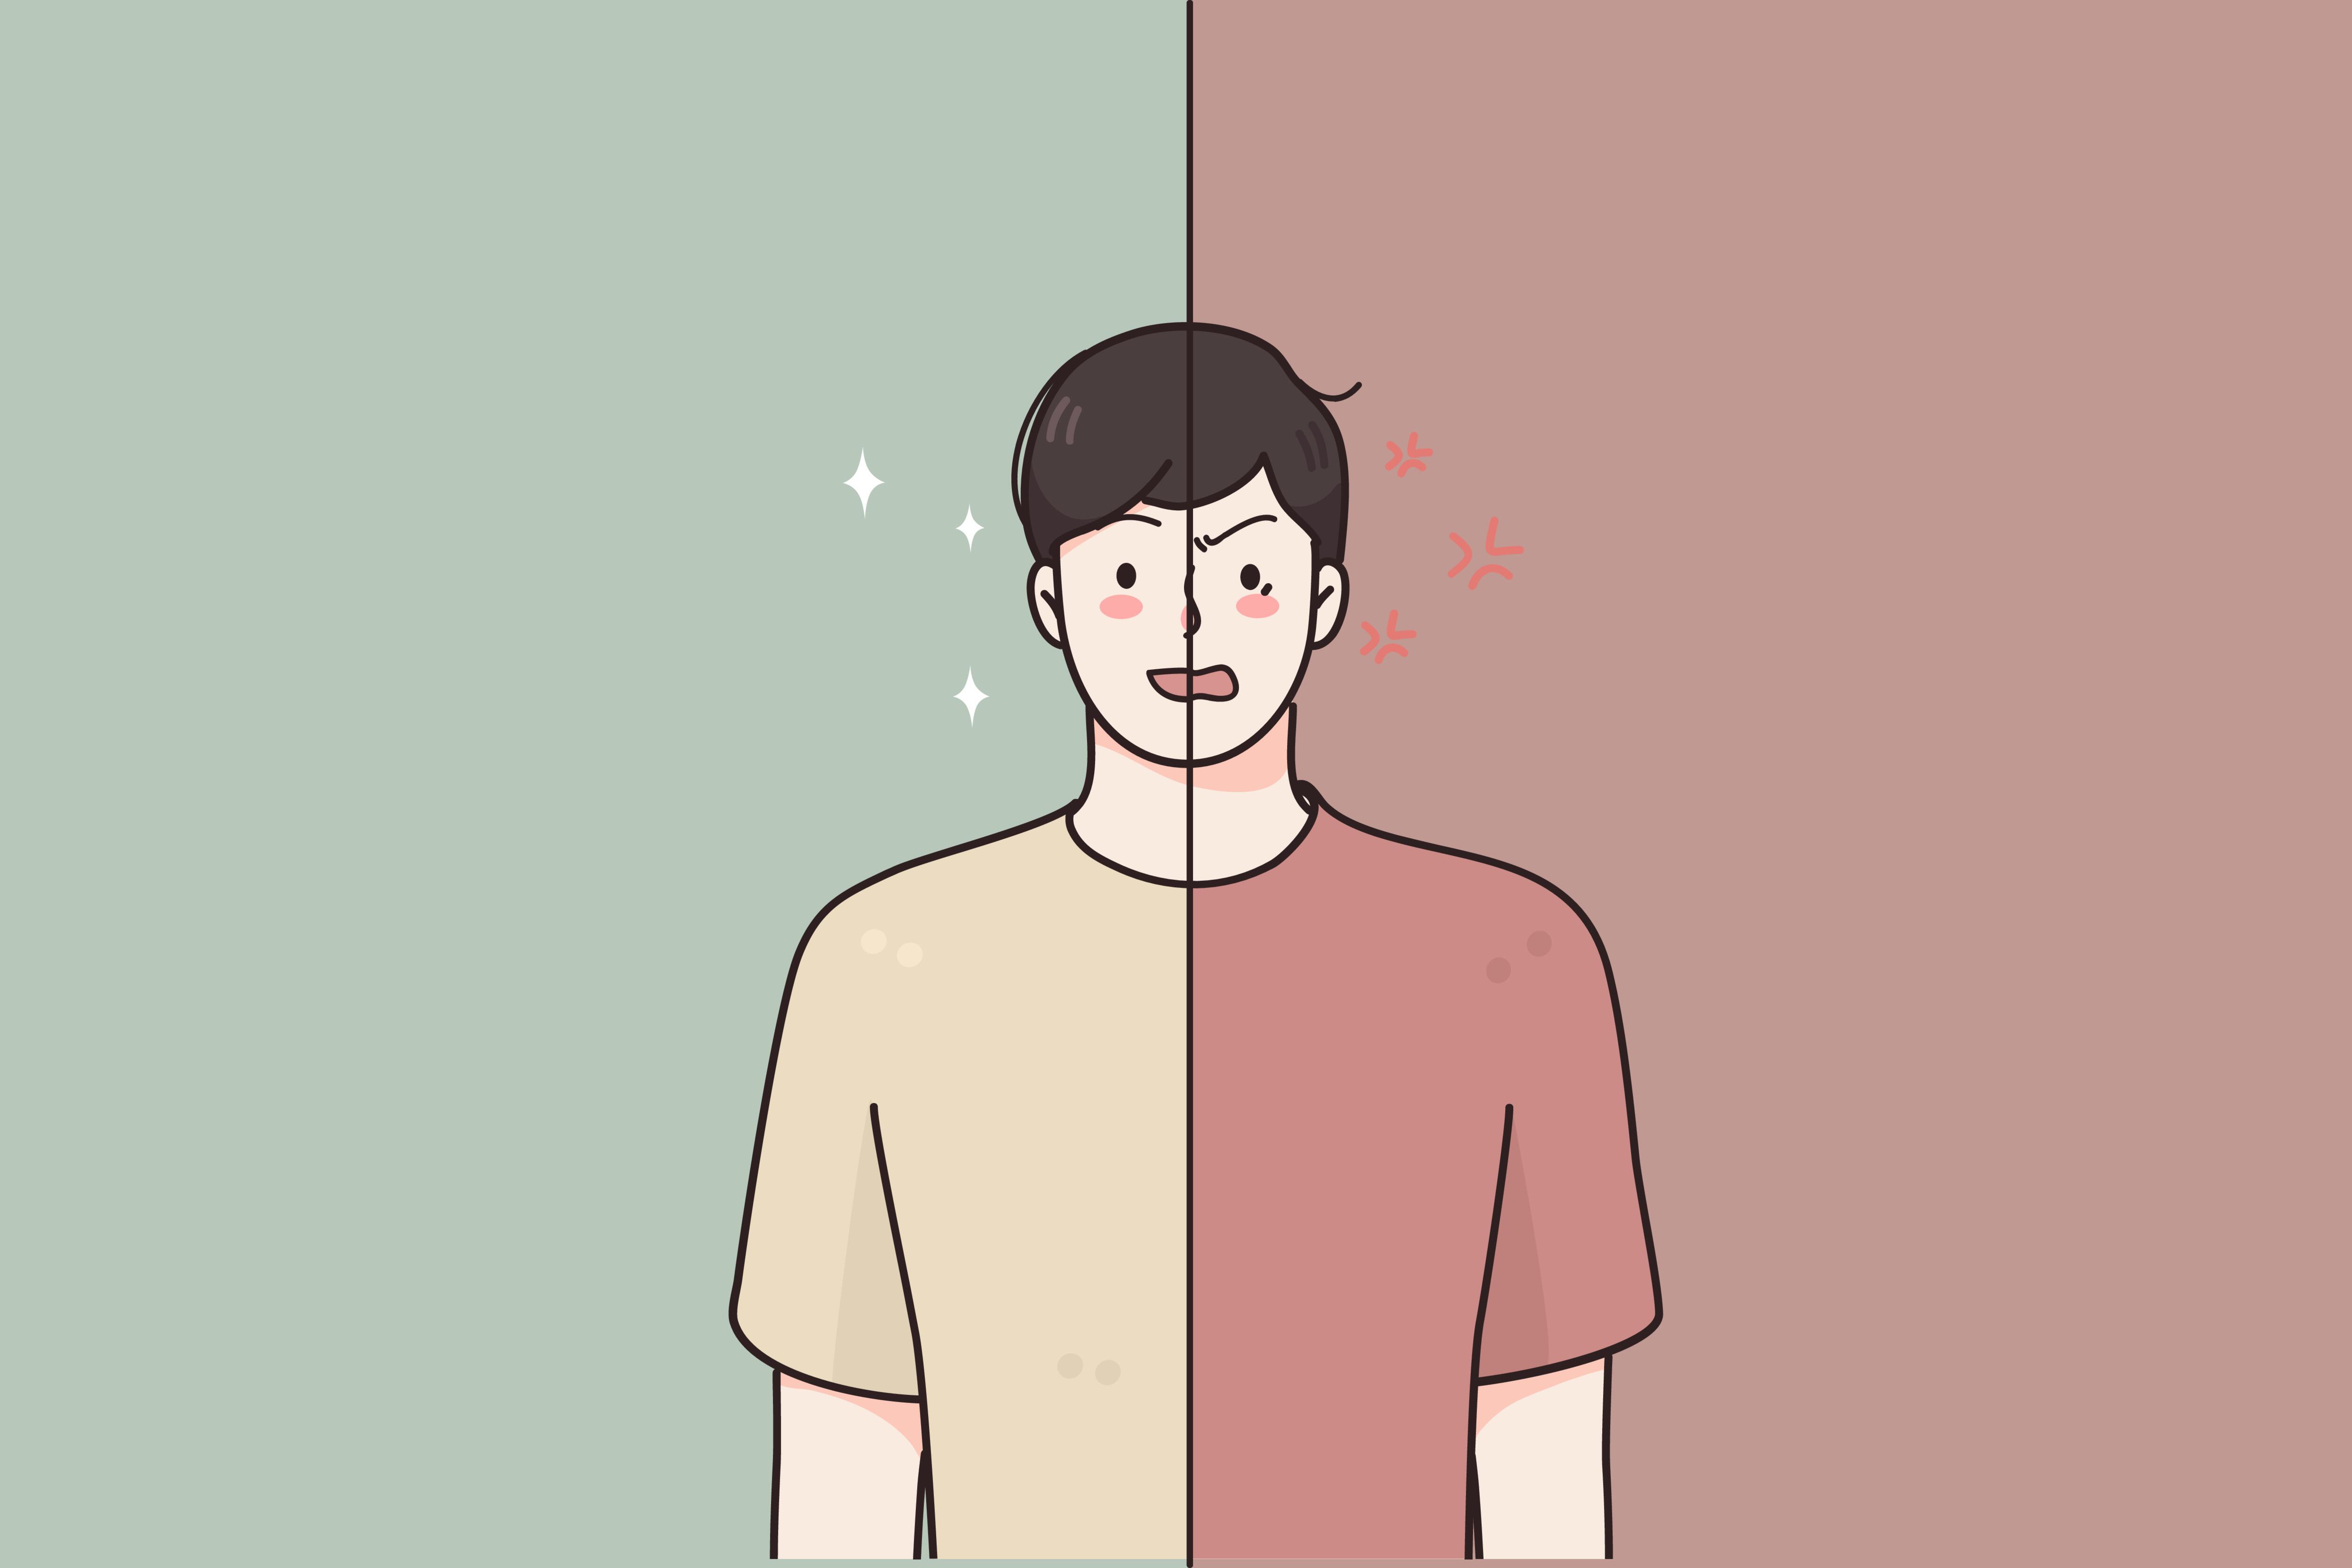 illustration of man with bipolar disorder